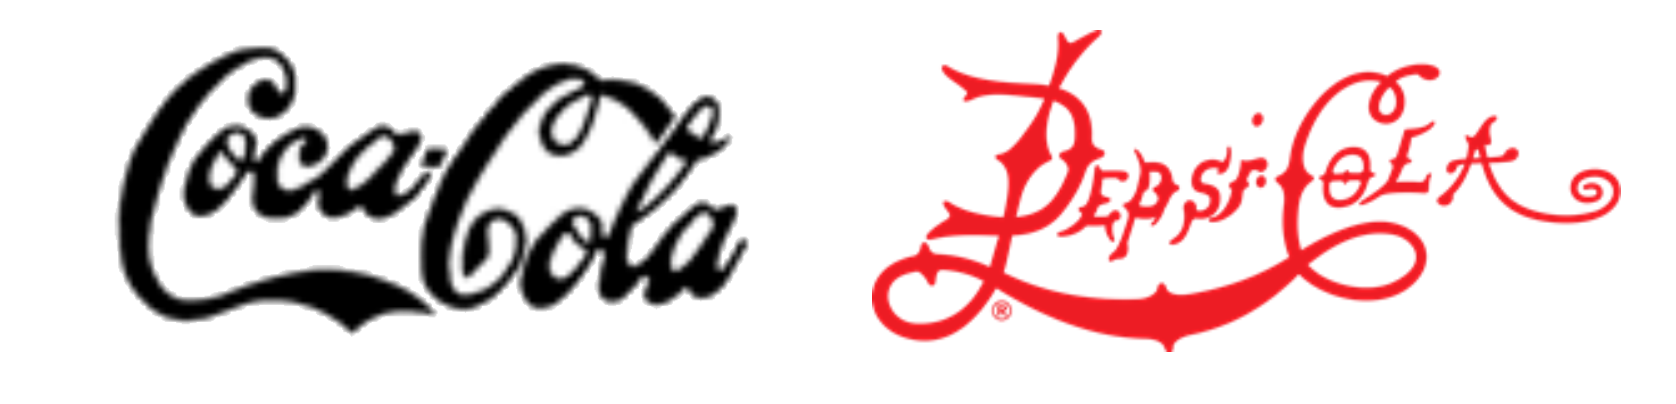 First Coca-Cola and Pepsi-Cola logos 